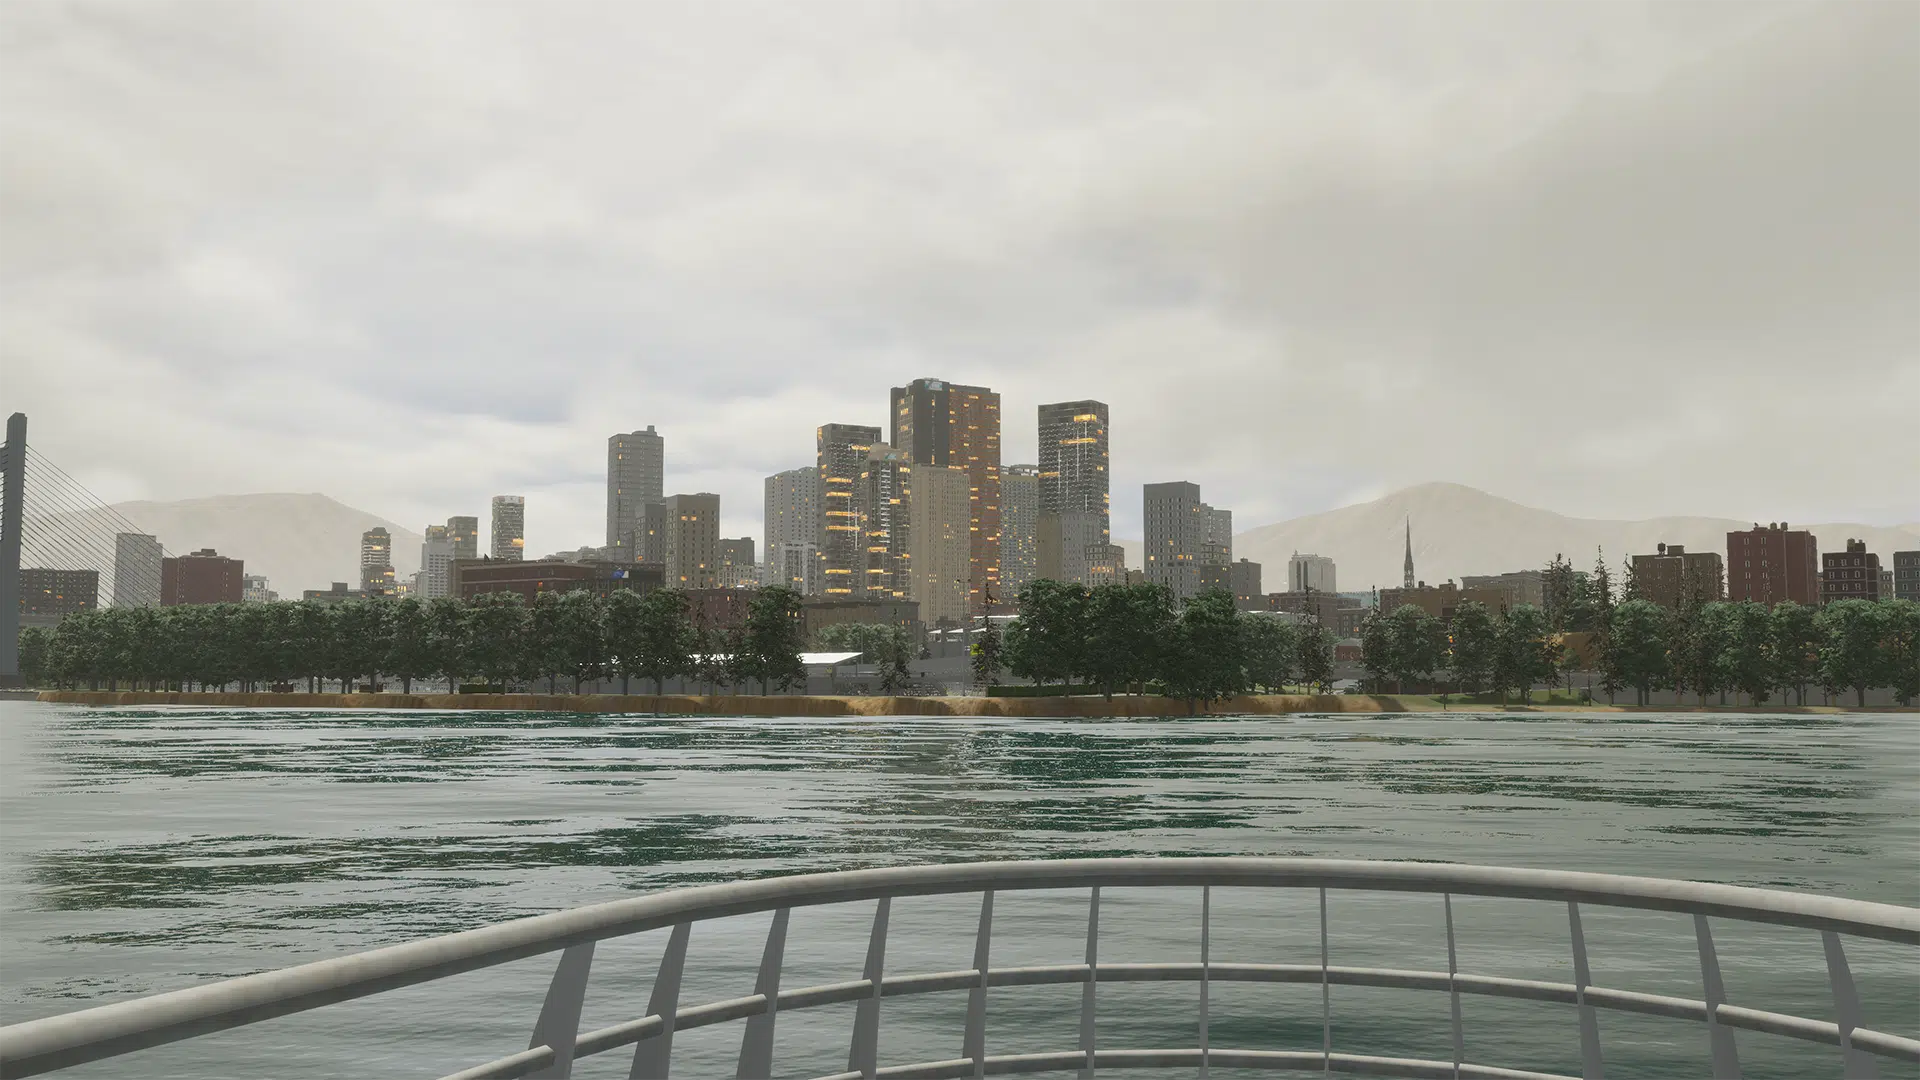 Cities Skylines 2 Update 1.0.11f1